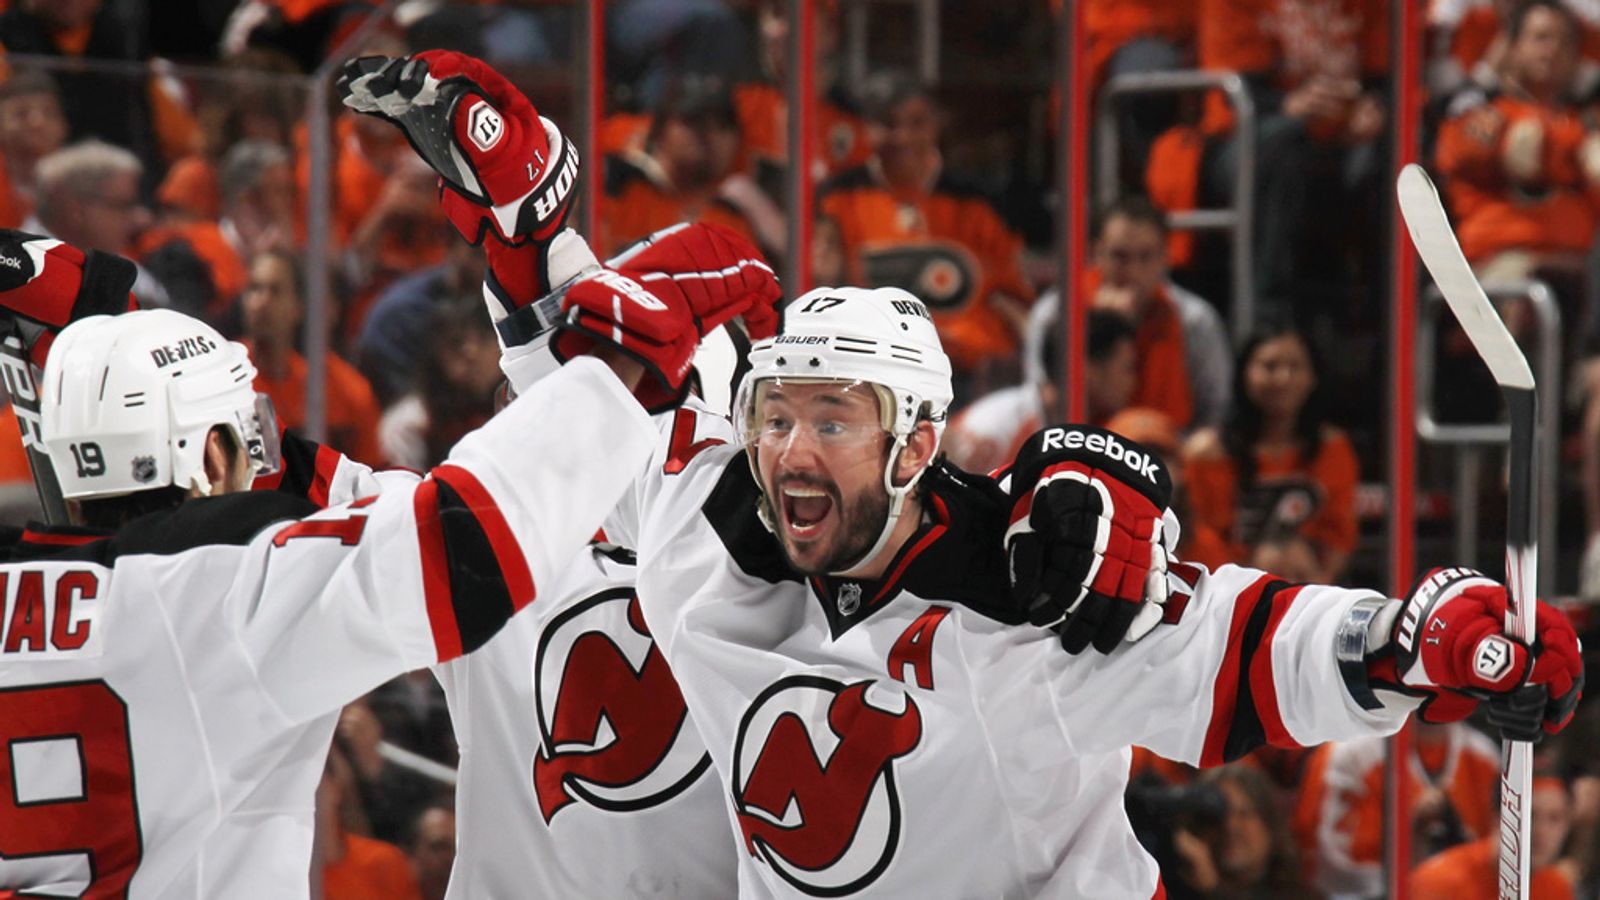 NHL: Devils reach finals, Ice Hockey News